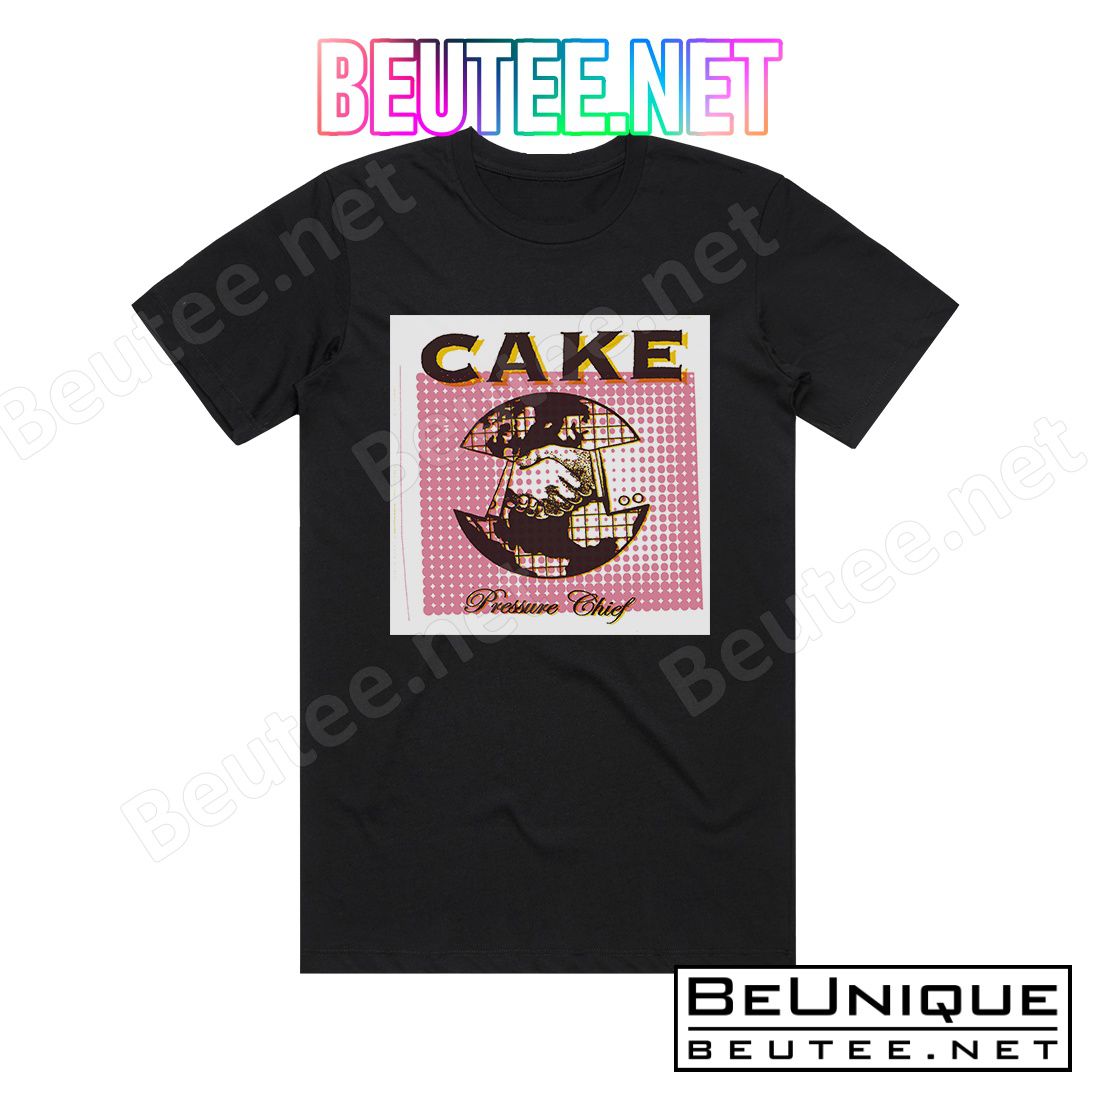 Cake Pressure Chief 2 Album Cover T-Shirt